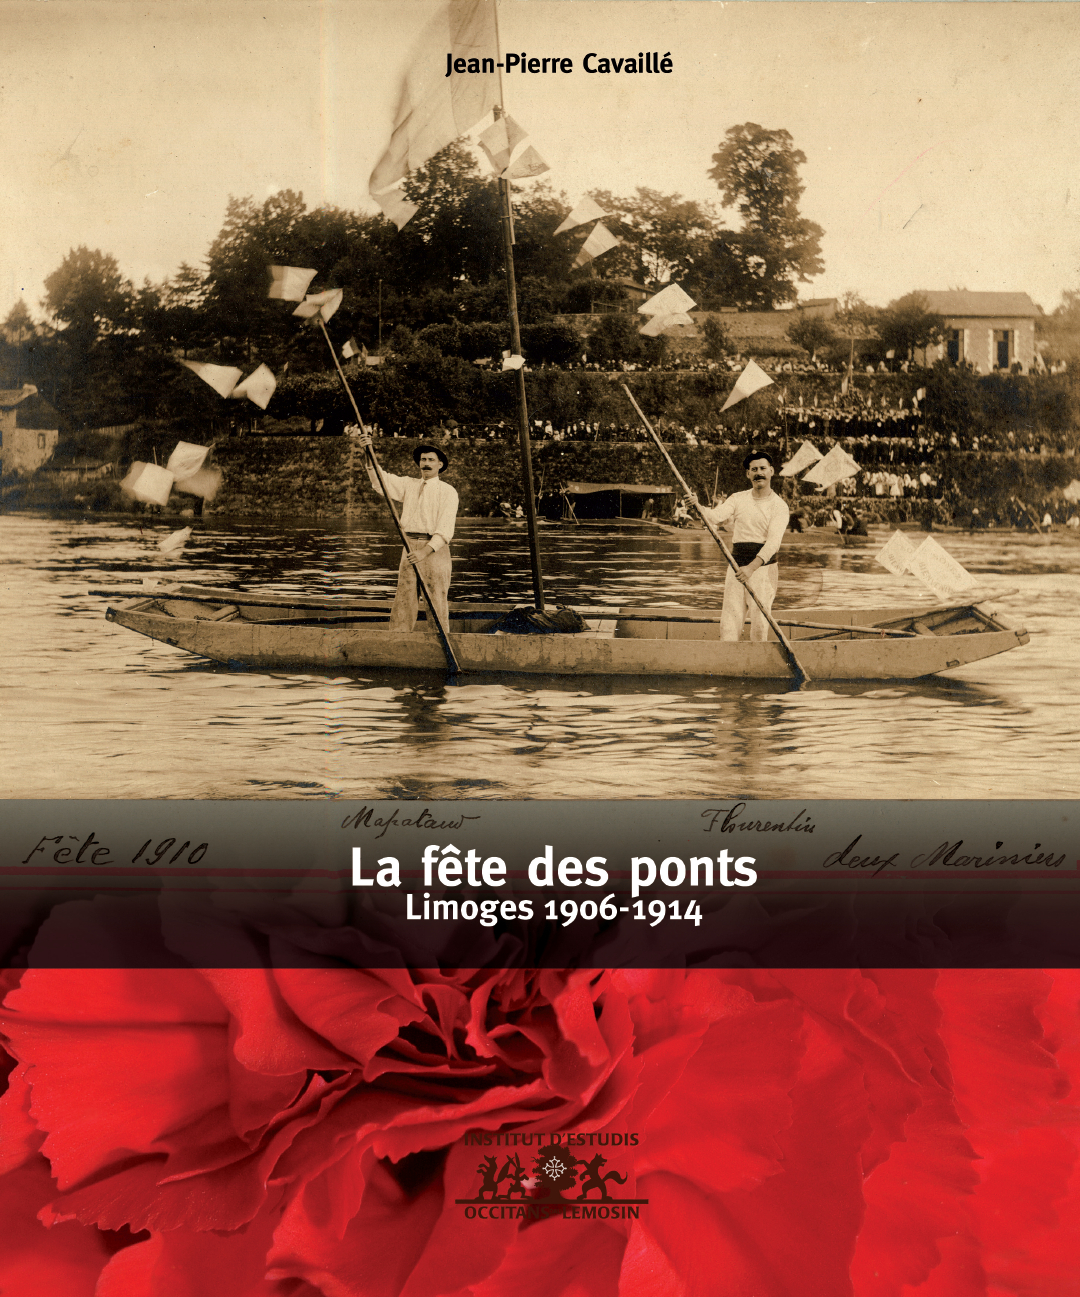 La fête des ponts - Limoges 1906-1914